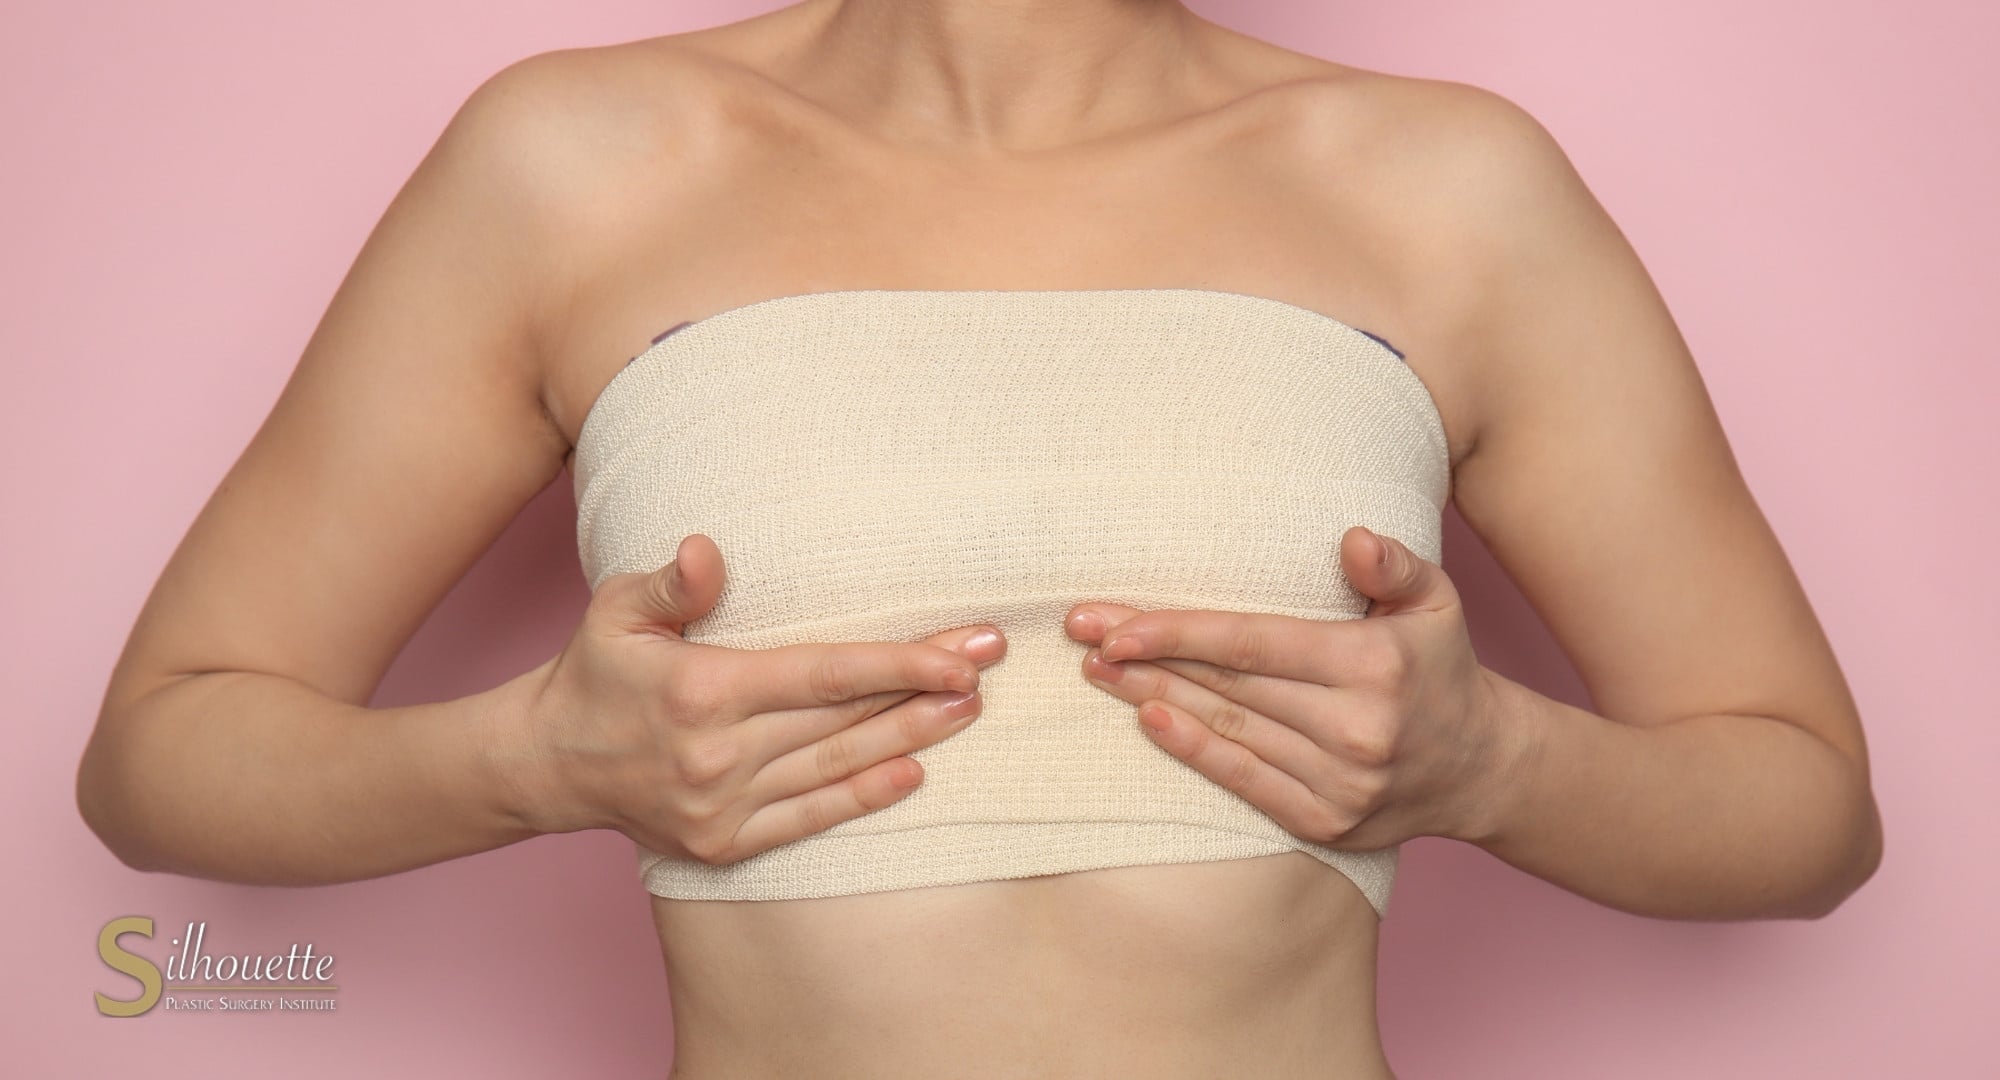 Breast Lift Procedure Steps  American Society of Plastic Surgeons